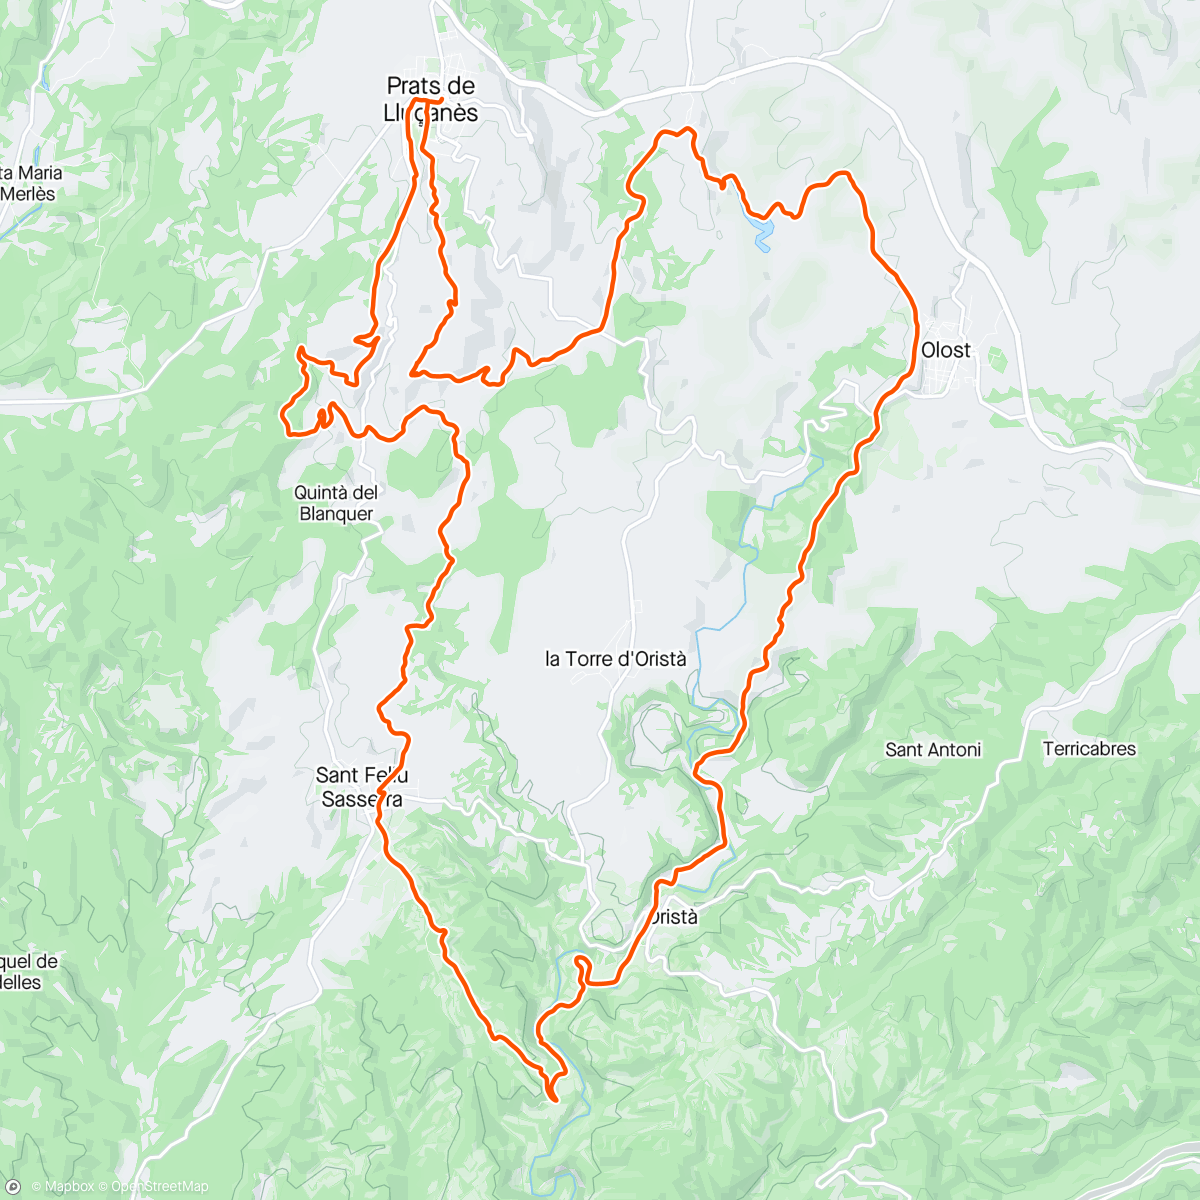 Map of the activity, Gravel Prats de Lluçanes